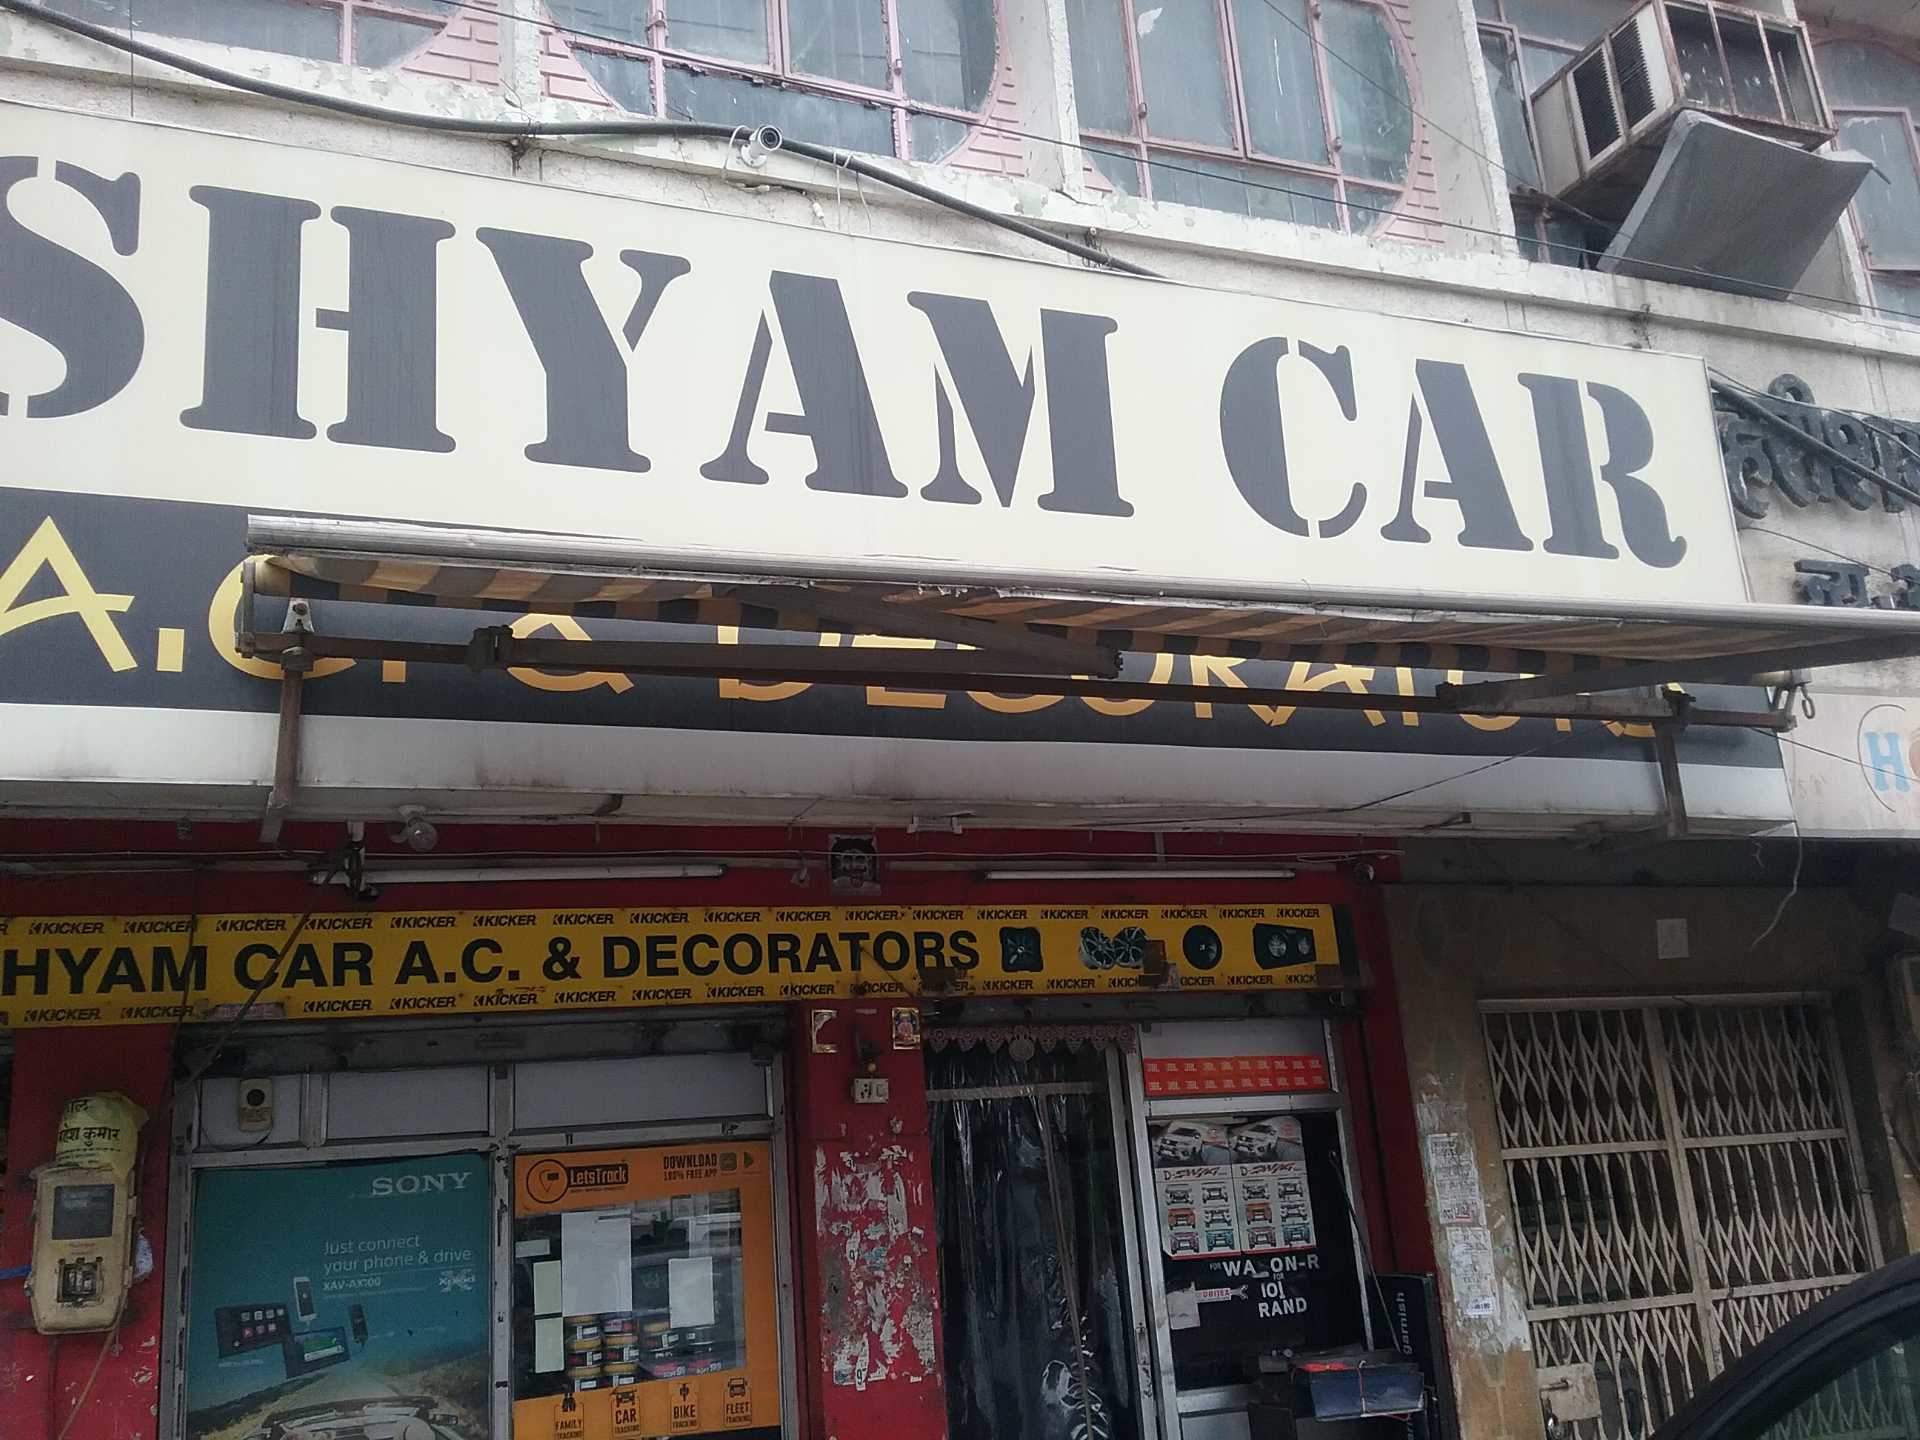 Shyam Car Ac & Decorators Photos, Bhagwan Cinema, Agra - Shoutmeloud , HD Wallpaper & Backgrounds